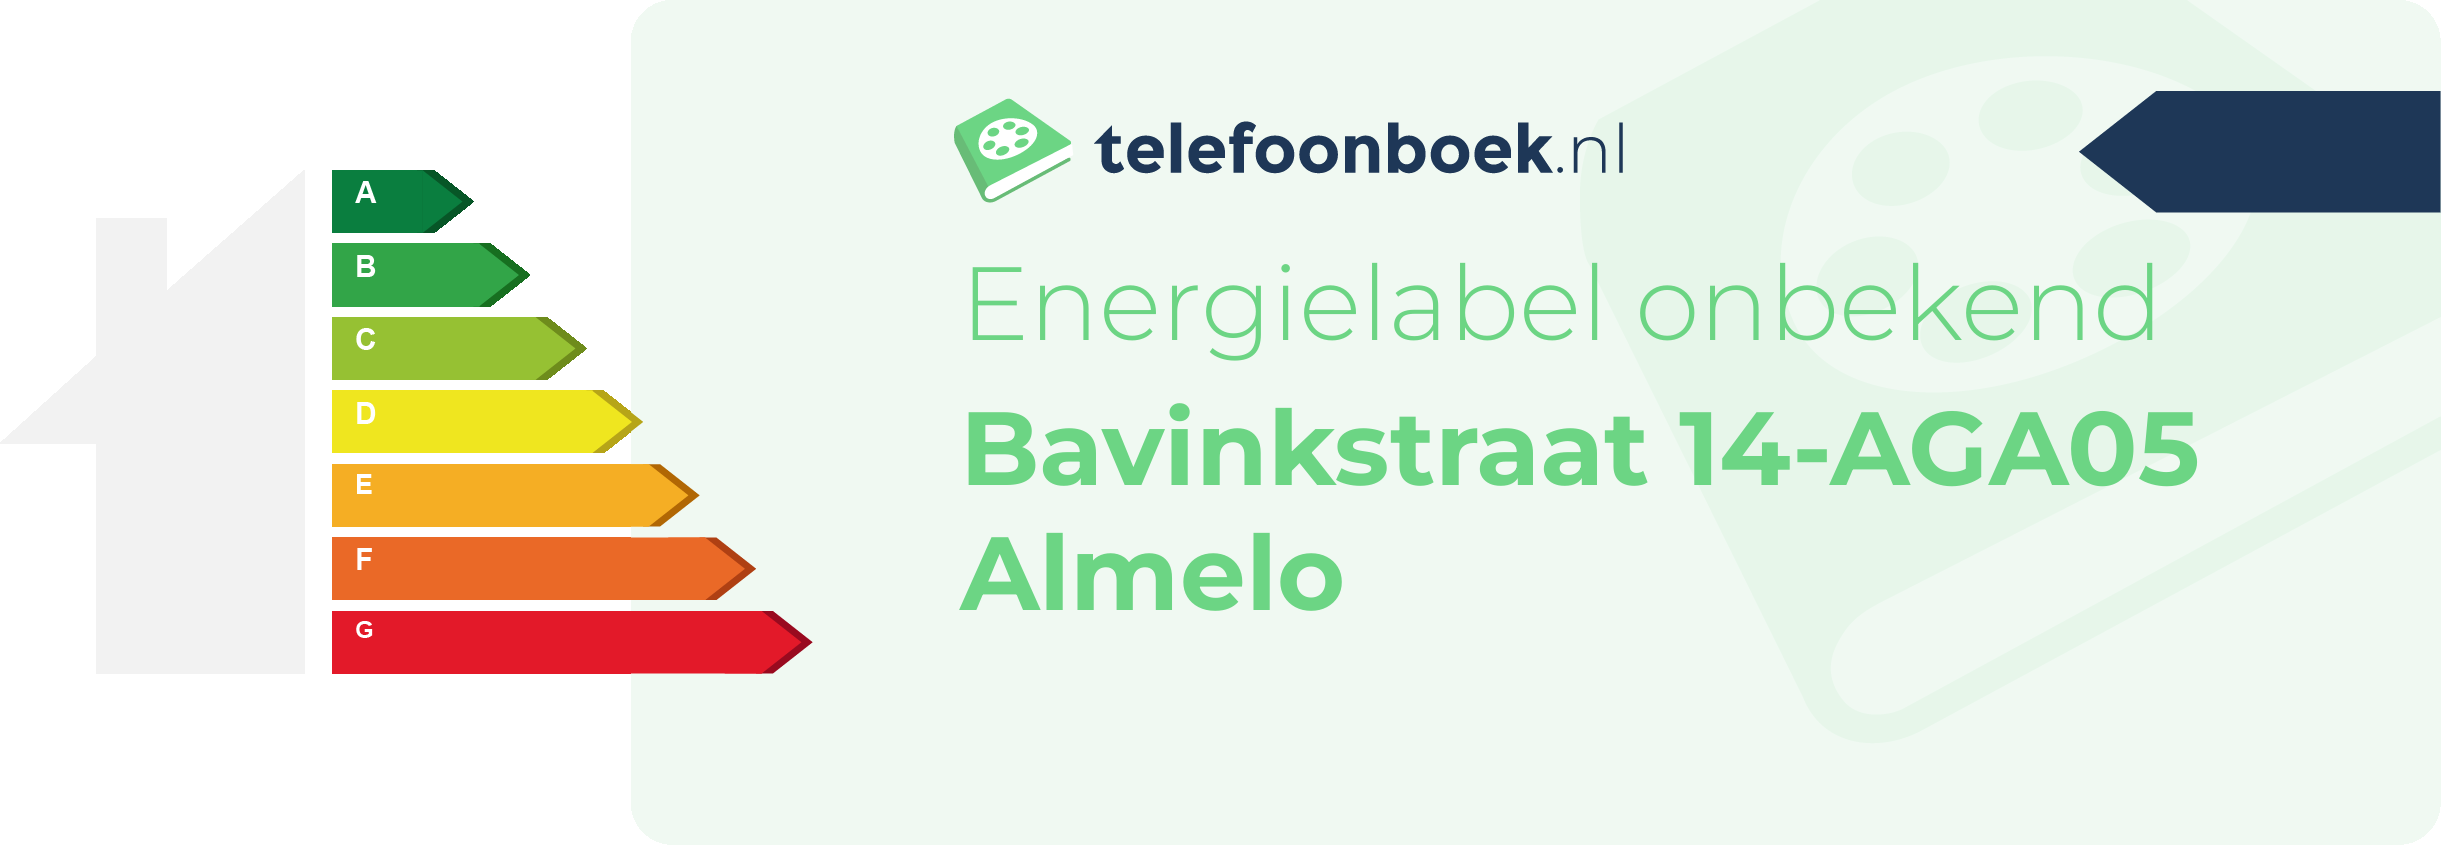 Energielabel Bavinkstraat 14-AGA05 Almelo